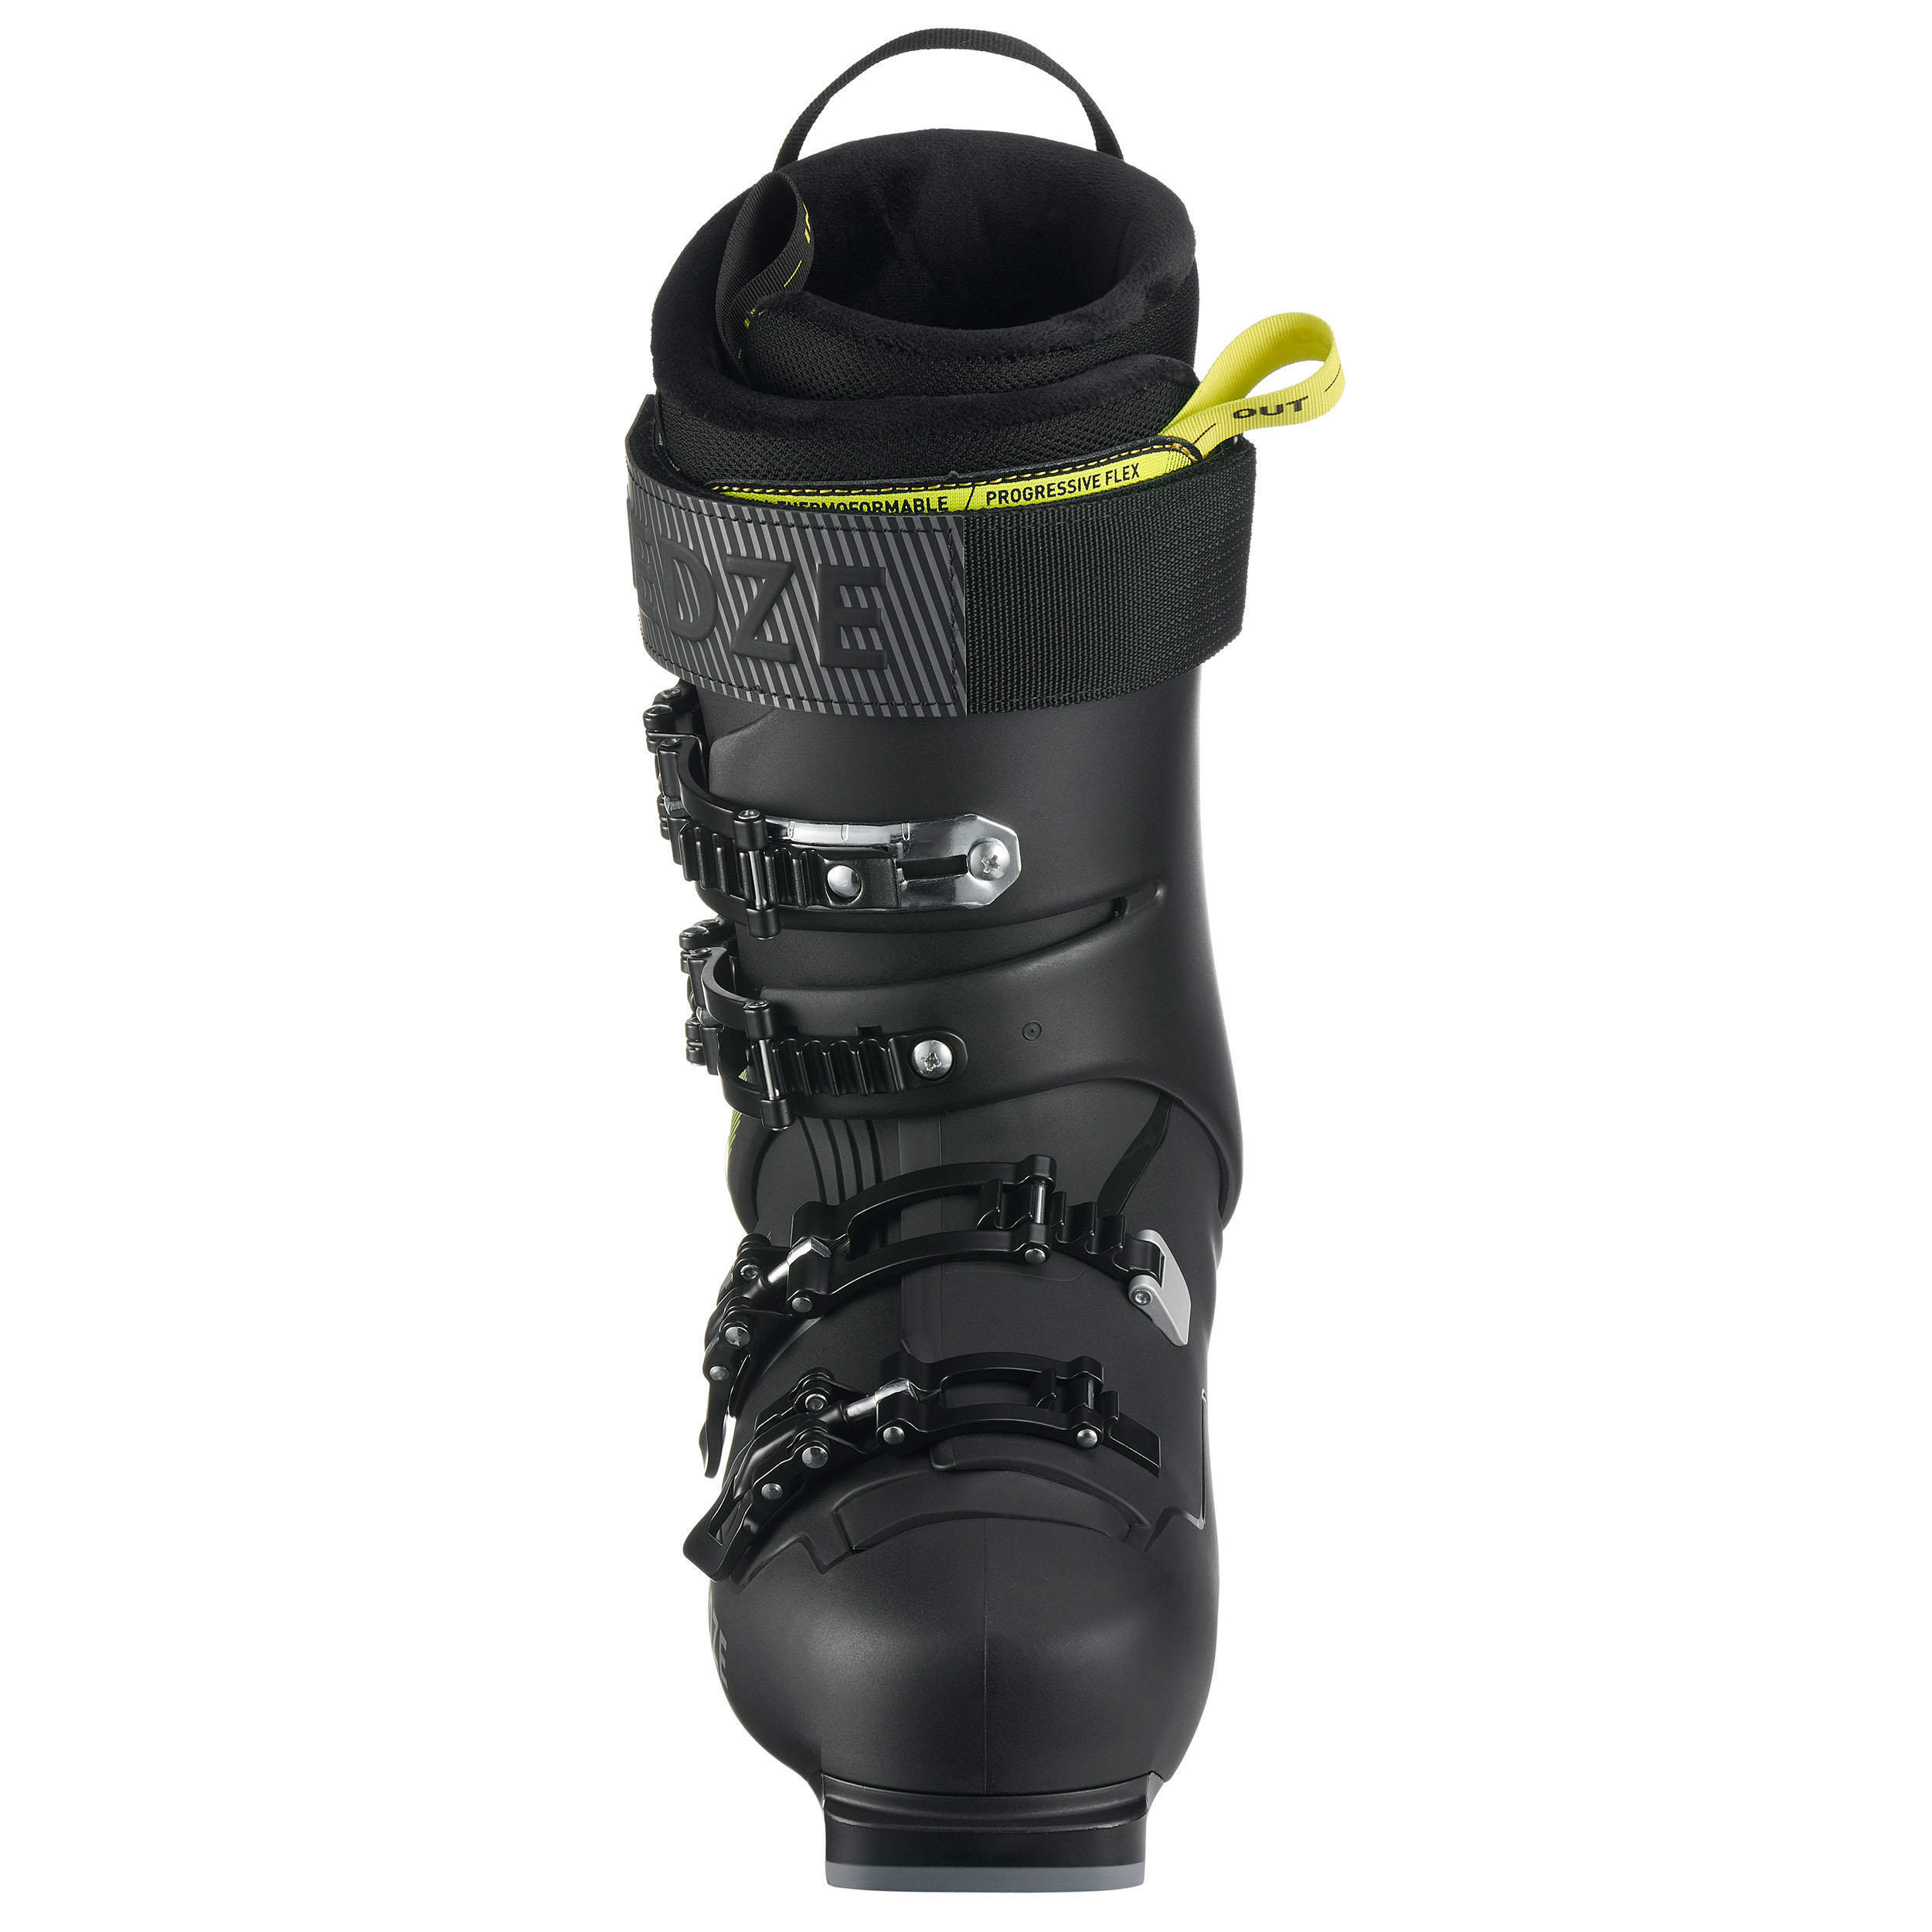 Refurbished Mens Downhill Ski Boots Fit Black Yellow - A Grade 7/7